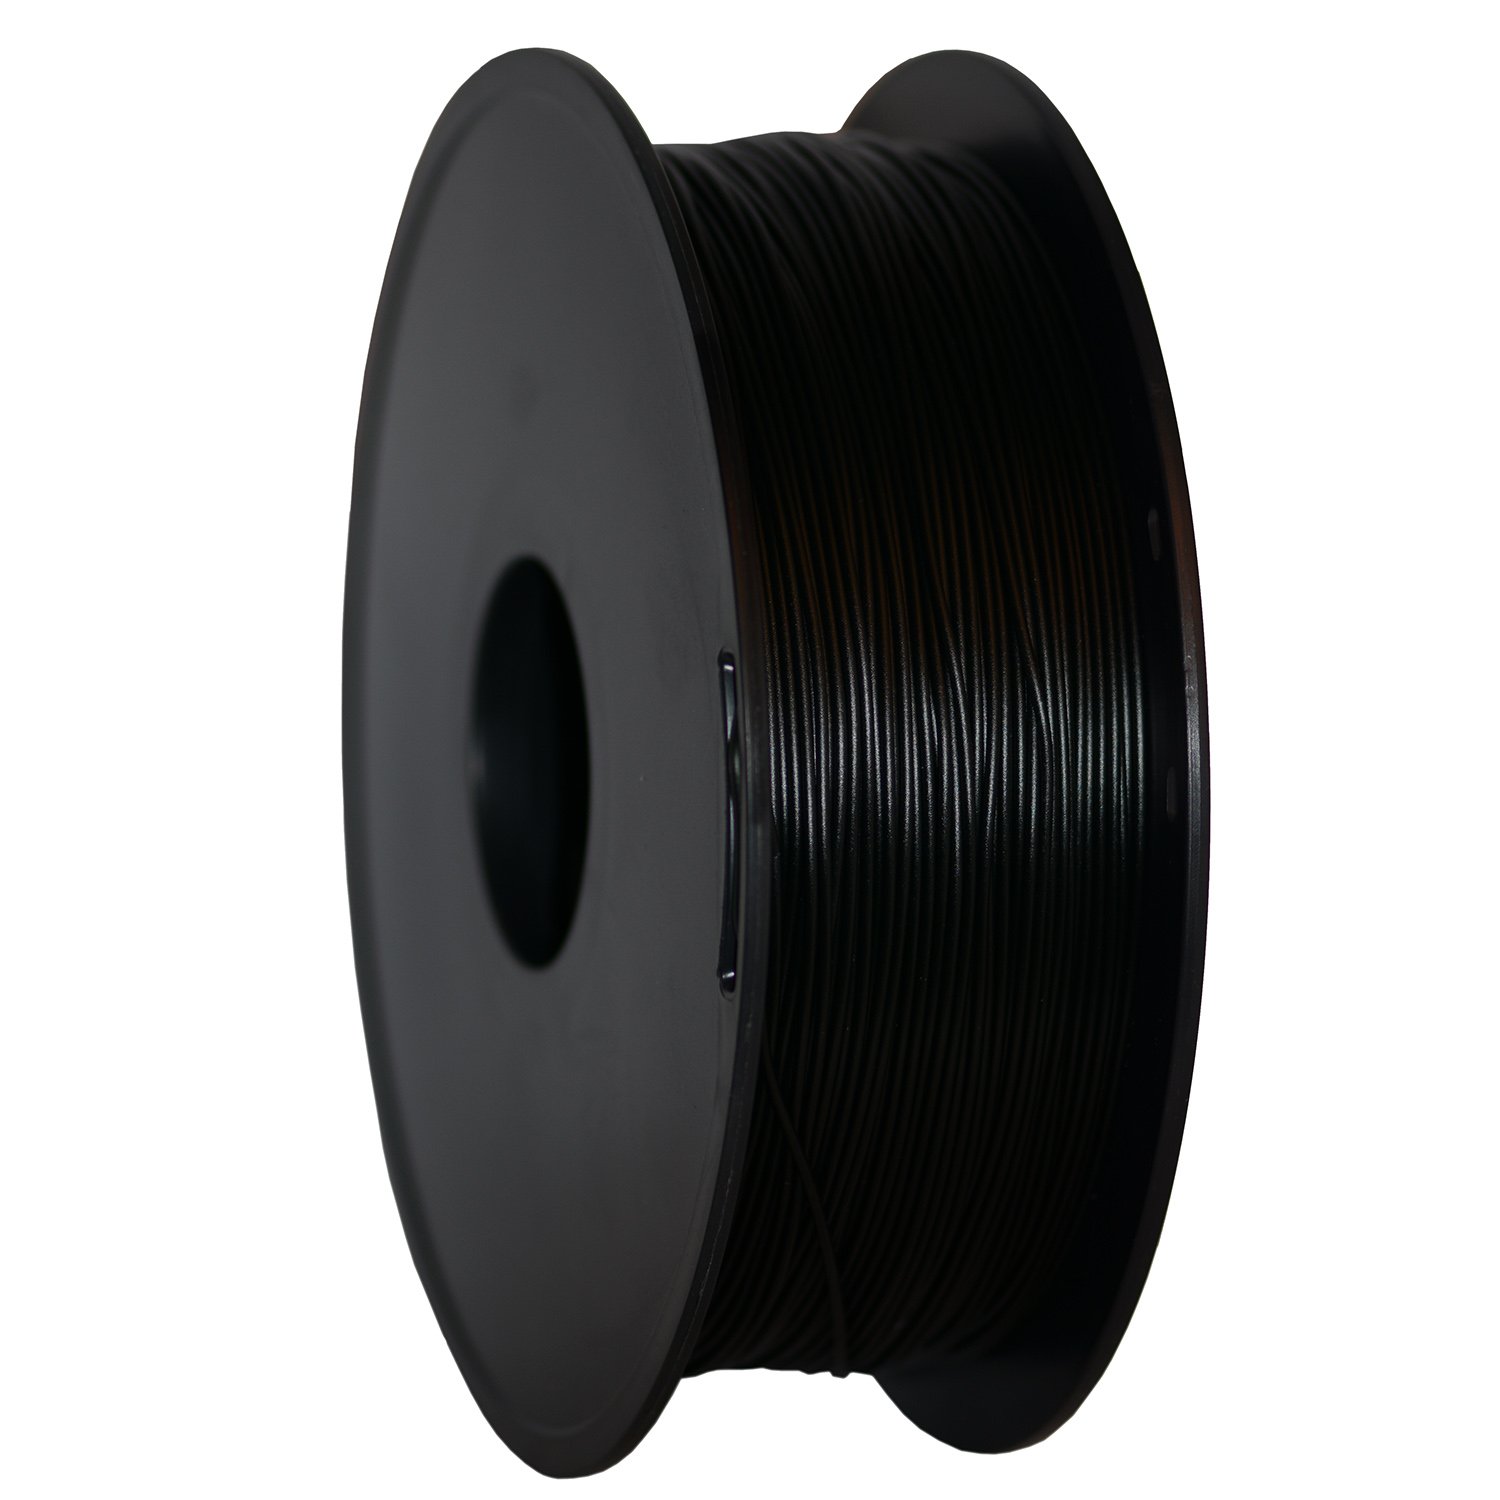 GEEETECH Filamento PLA 1.75mm 1kg Spool per Stampante 3D, Nero